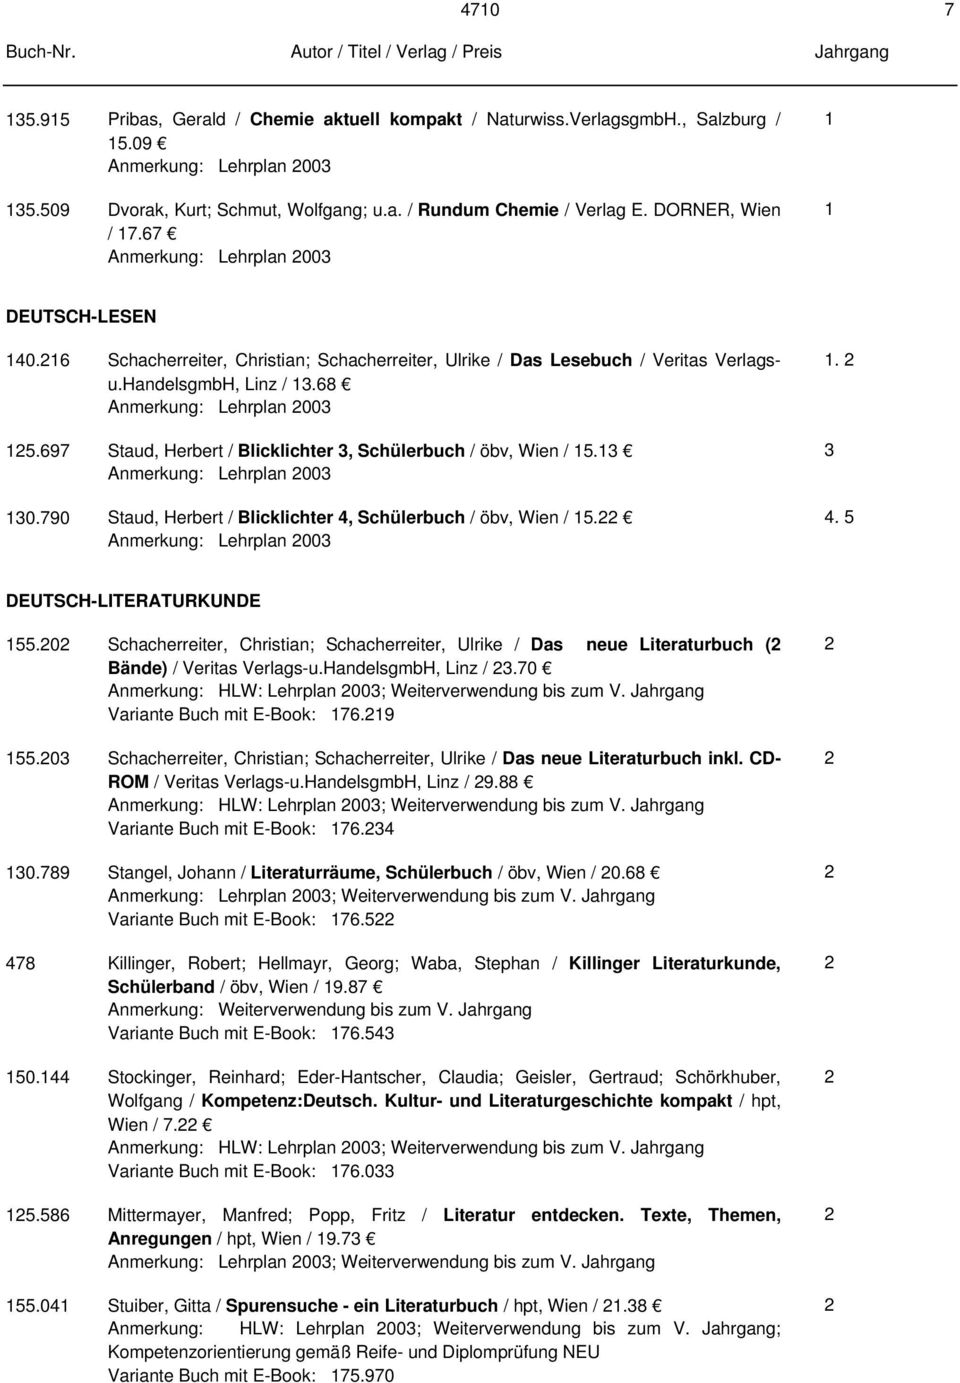 697 Staud, Herbert / Blicklichter, Schülerbuch / öbv, Wien /. Anmerkung: Lehrplan 00 0.790 Staud, Herbert / Blicklichter, Schülerbuch / öbv, Wien /. Anmerkung: Lehrplan 00.. DEUTSCH-LITERATURKUNDE.